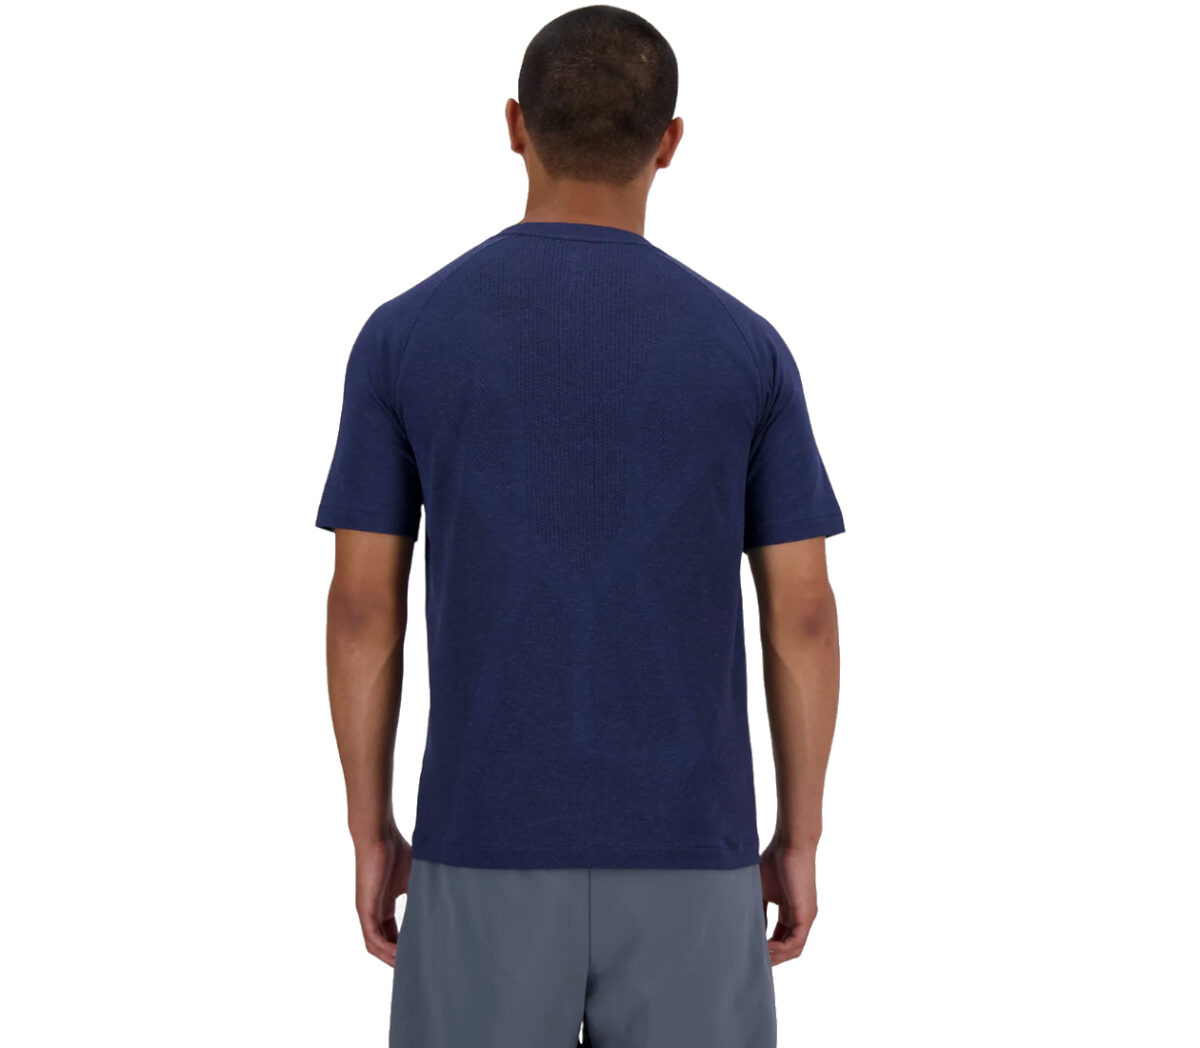 Dietro T-shirt New Balance knit tshirt uomo blu